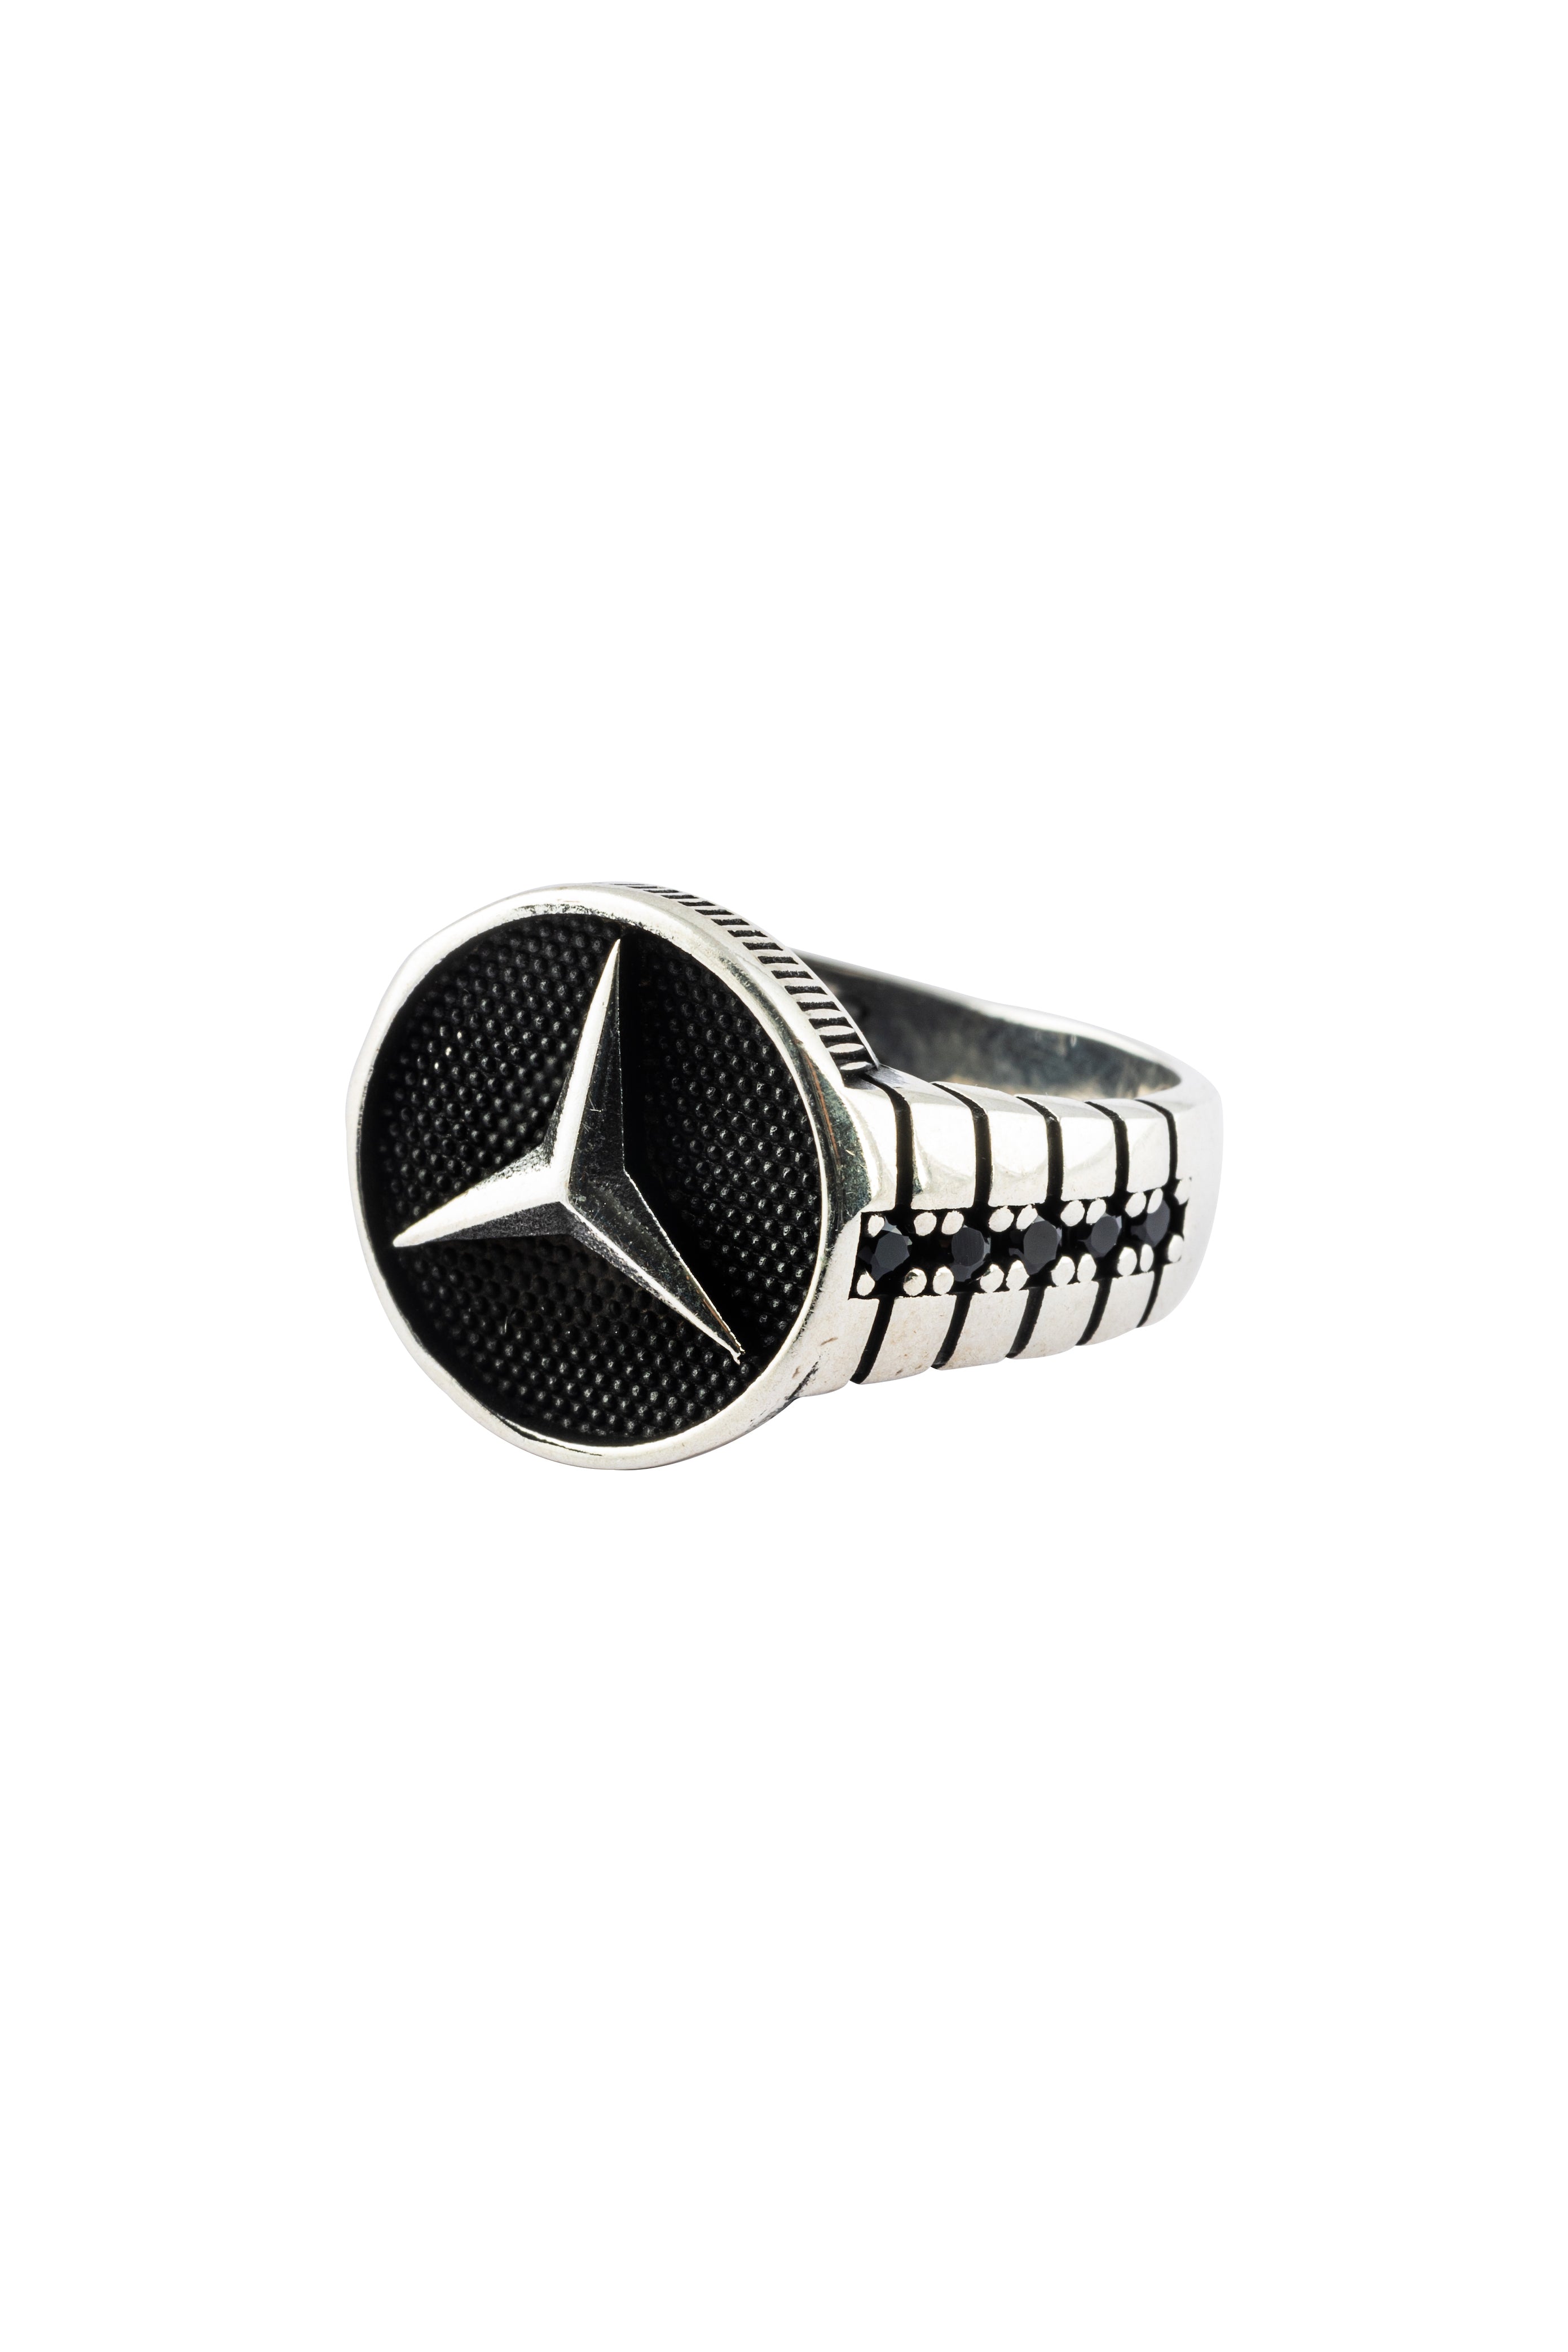 Ring SIGN German MERCEDES-BENZ Germany CAR Logo Daimler-Benz AG Camp ART  Handmad | eBay